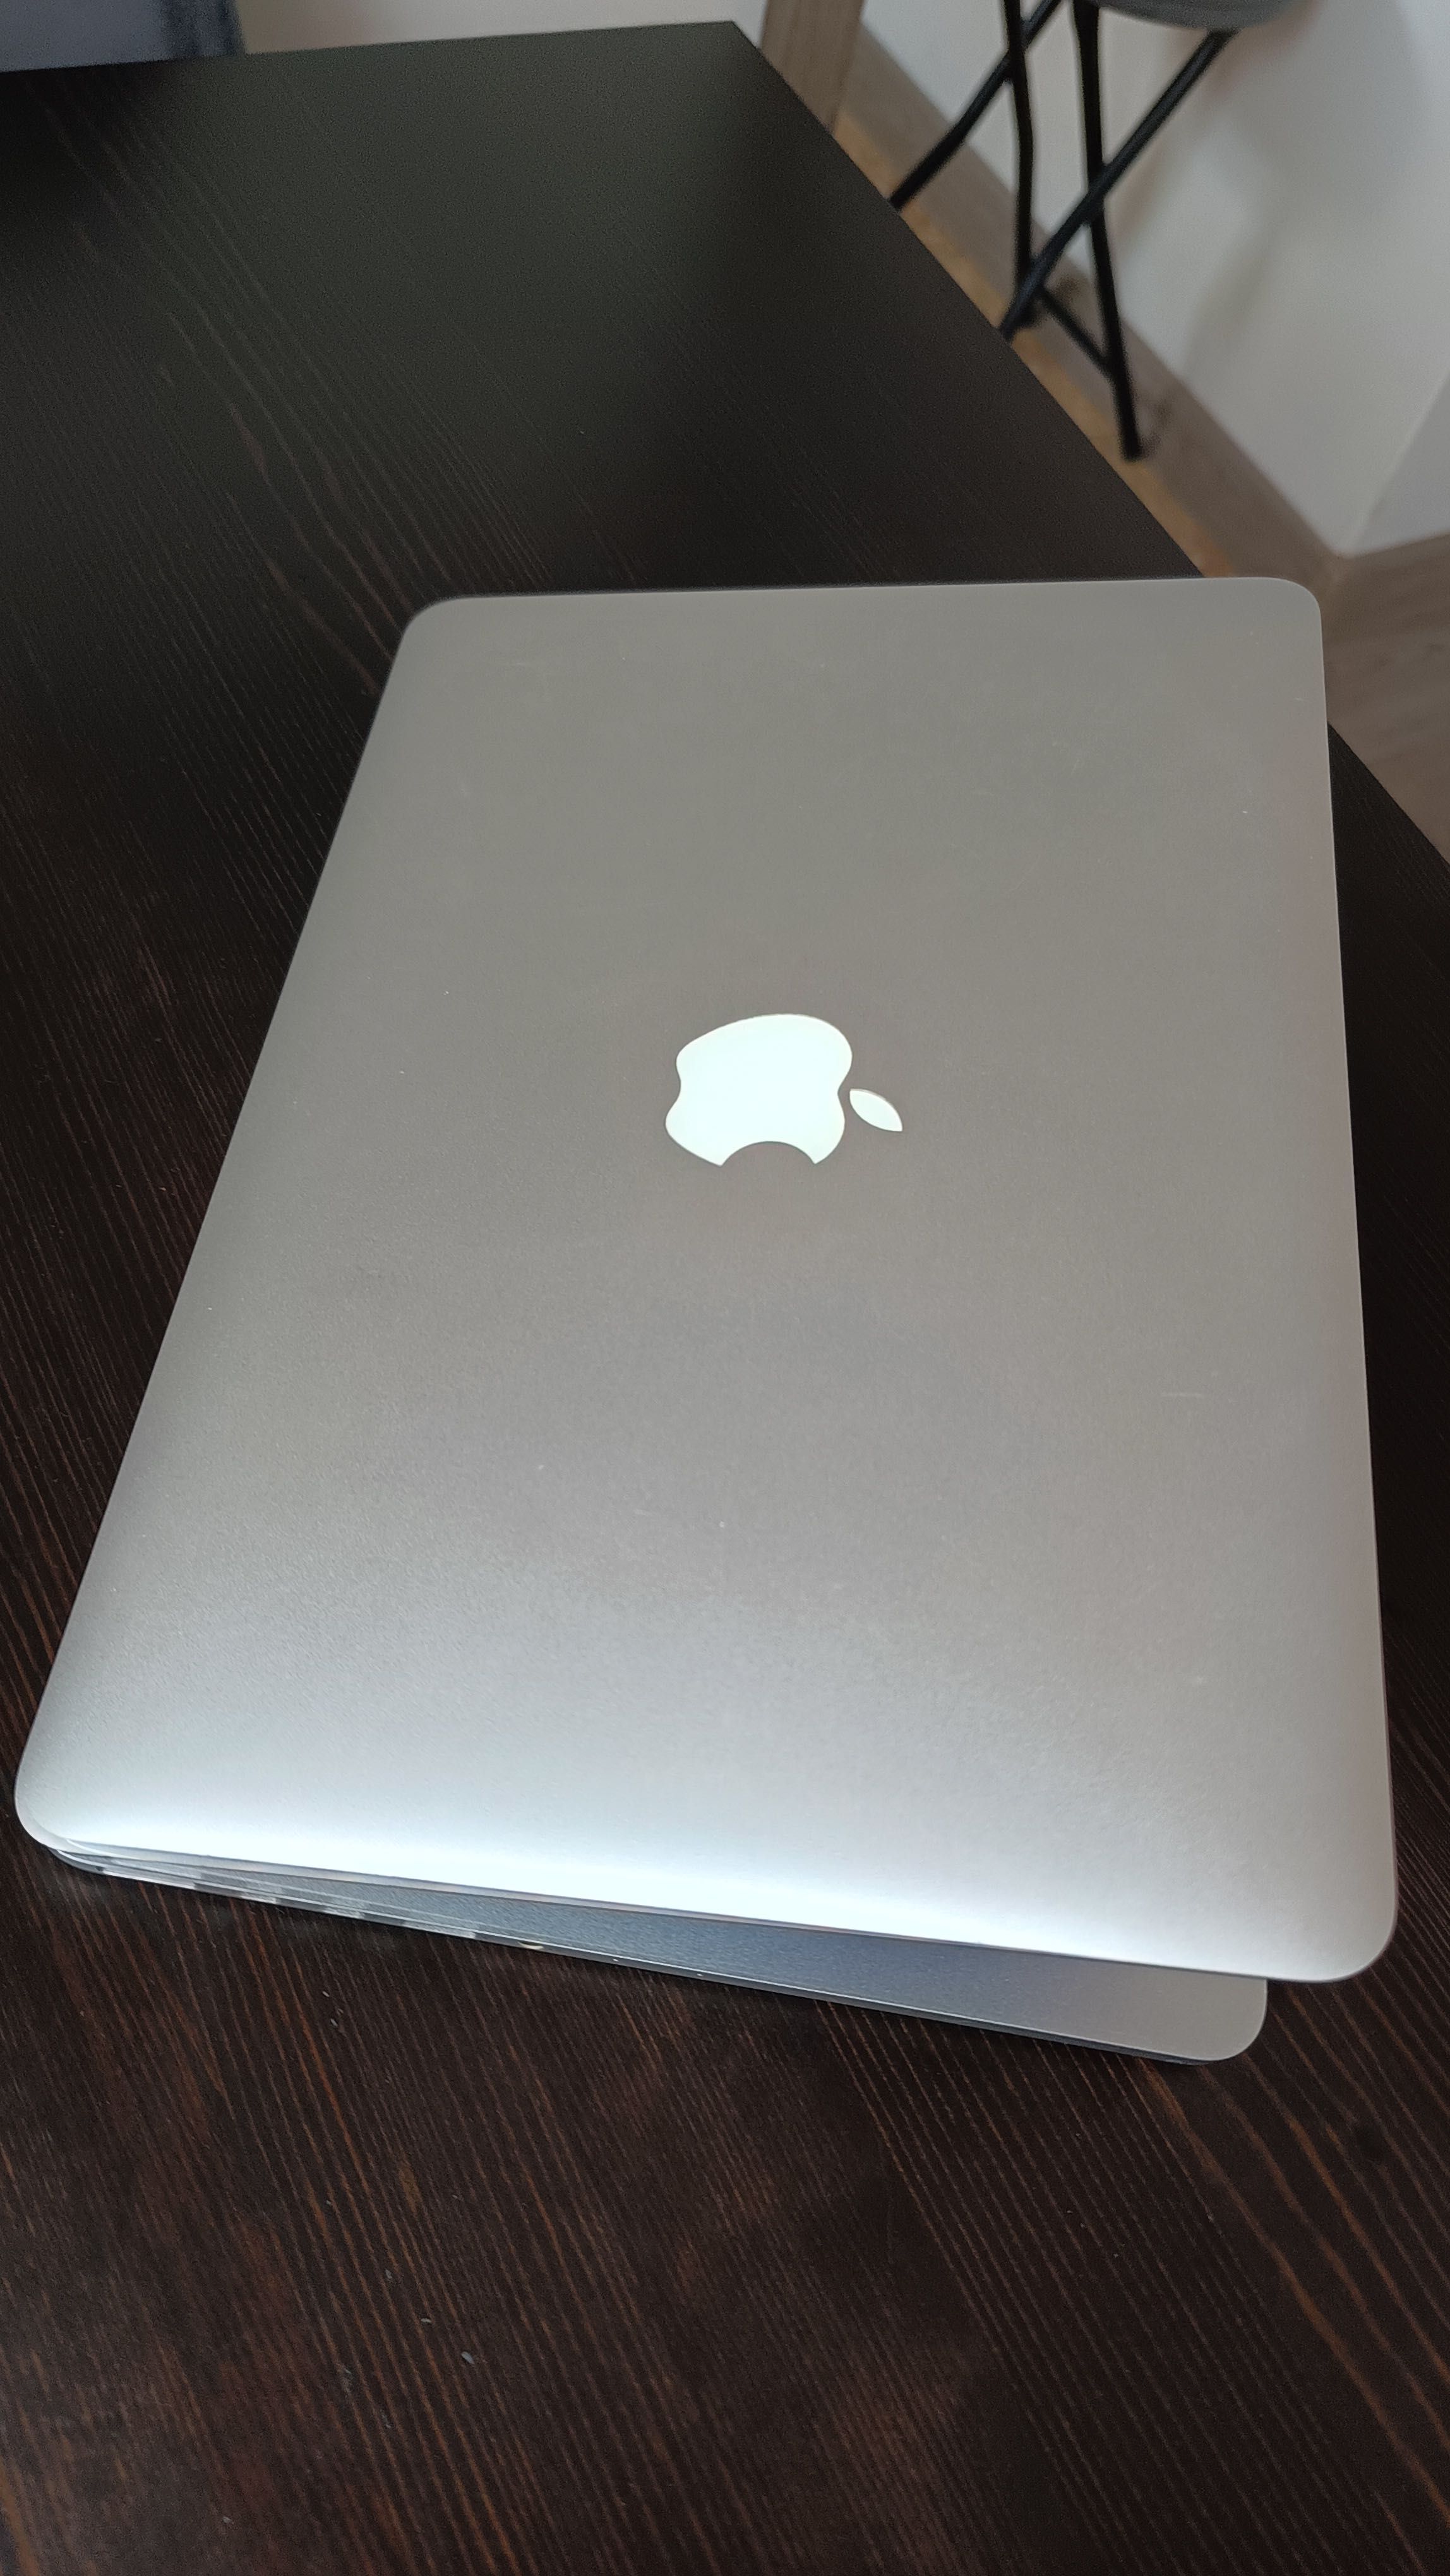 Macbook Pro 13" i5/8/512GB A1502 mid 2014 pudelko nowa bateria i dysk